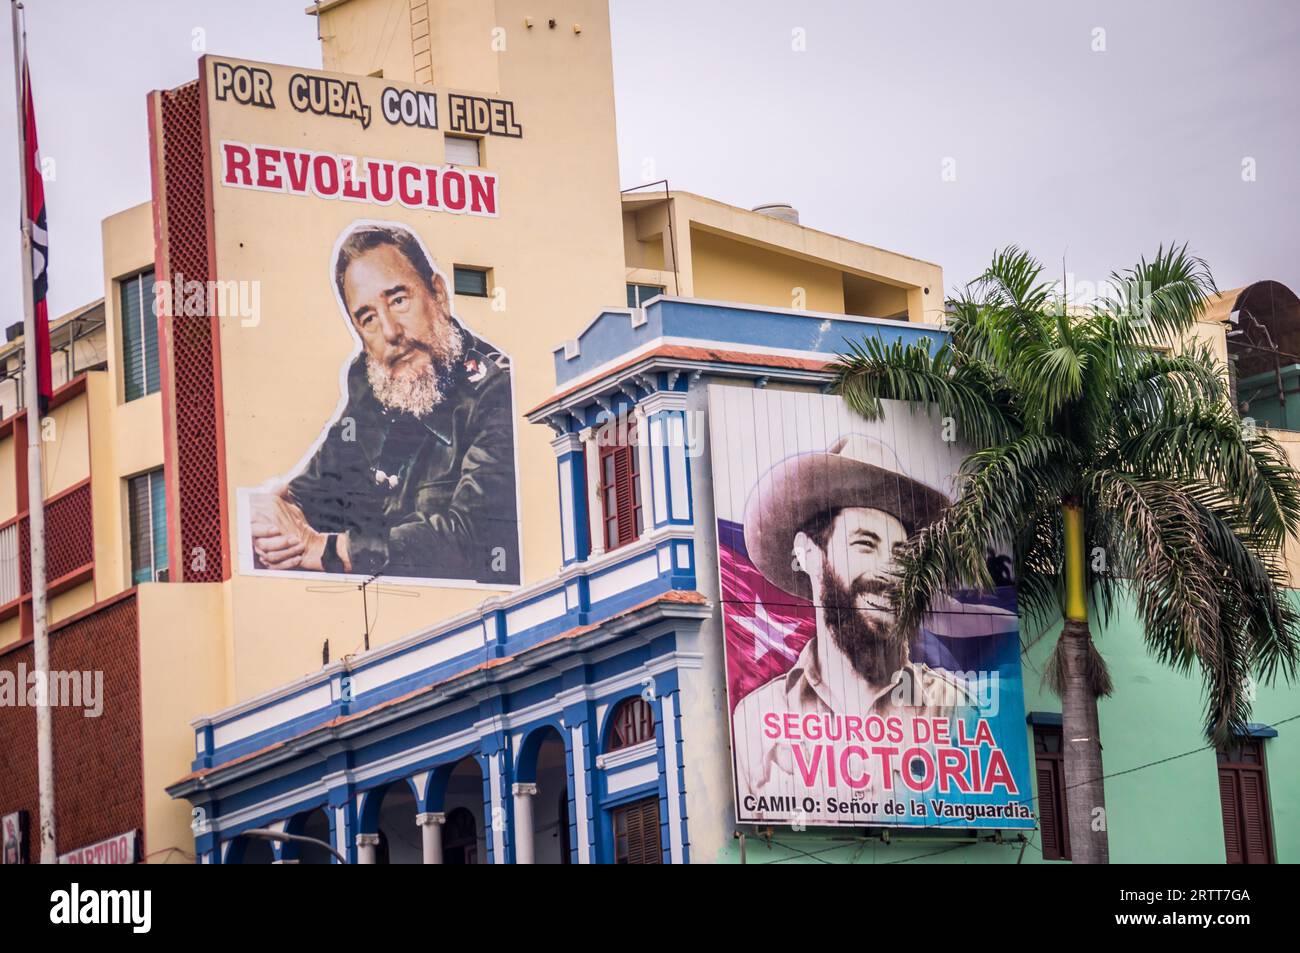 Santiago de Cuba, Cuba on January 4, 2015: Posters of Fidel Castro advertise the revolution. Santiago de Cuba is often referred to as birthplace of Stock Photo